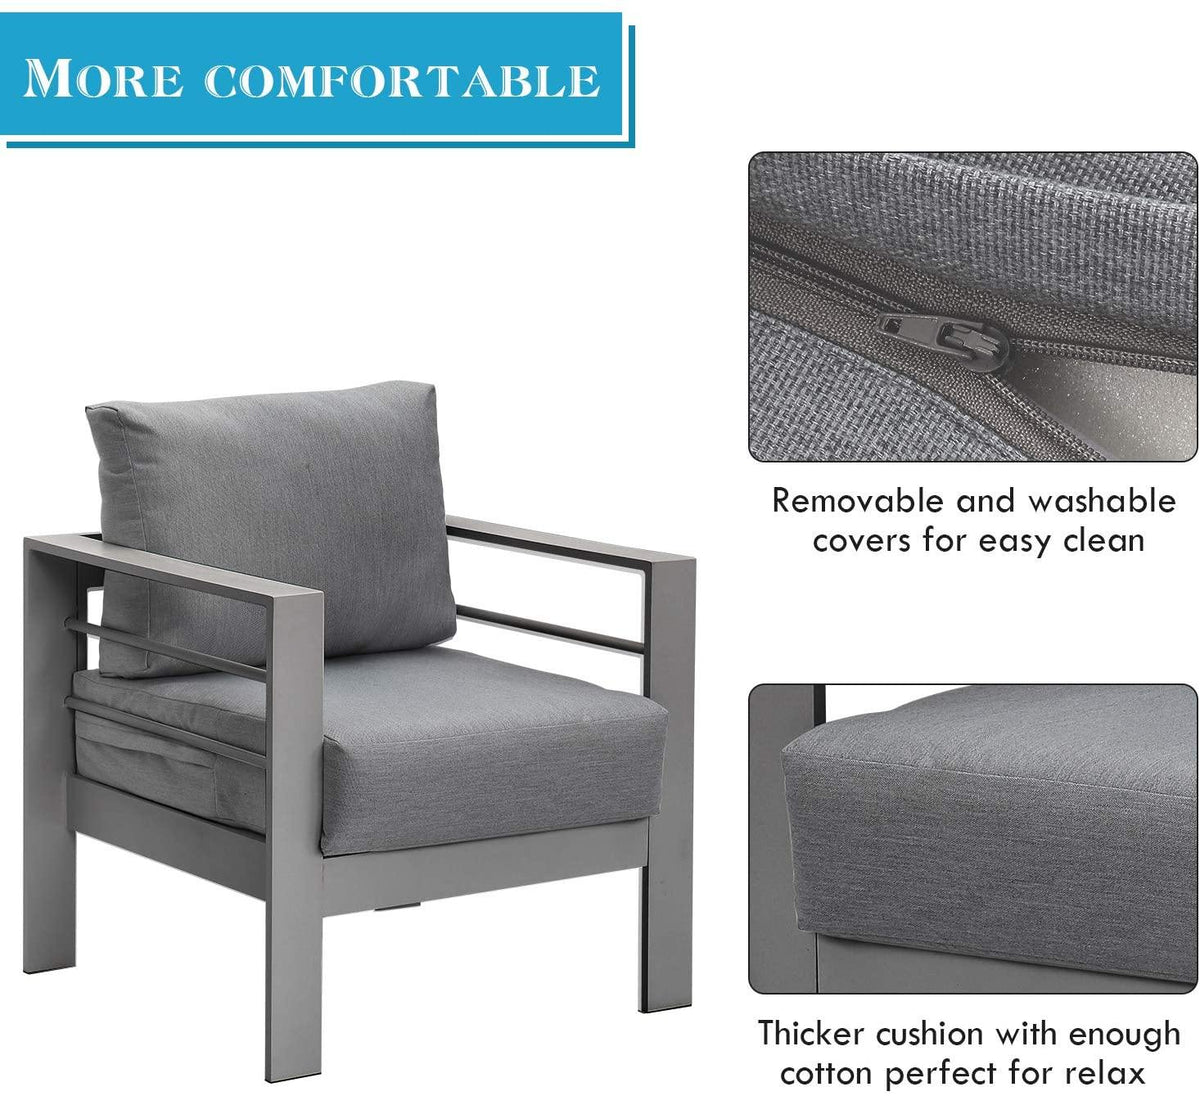 Aluminium 4 Piece Garden Furniture Sofa Set in Black and Grey Rattan Furniture MaxiFurn 